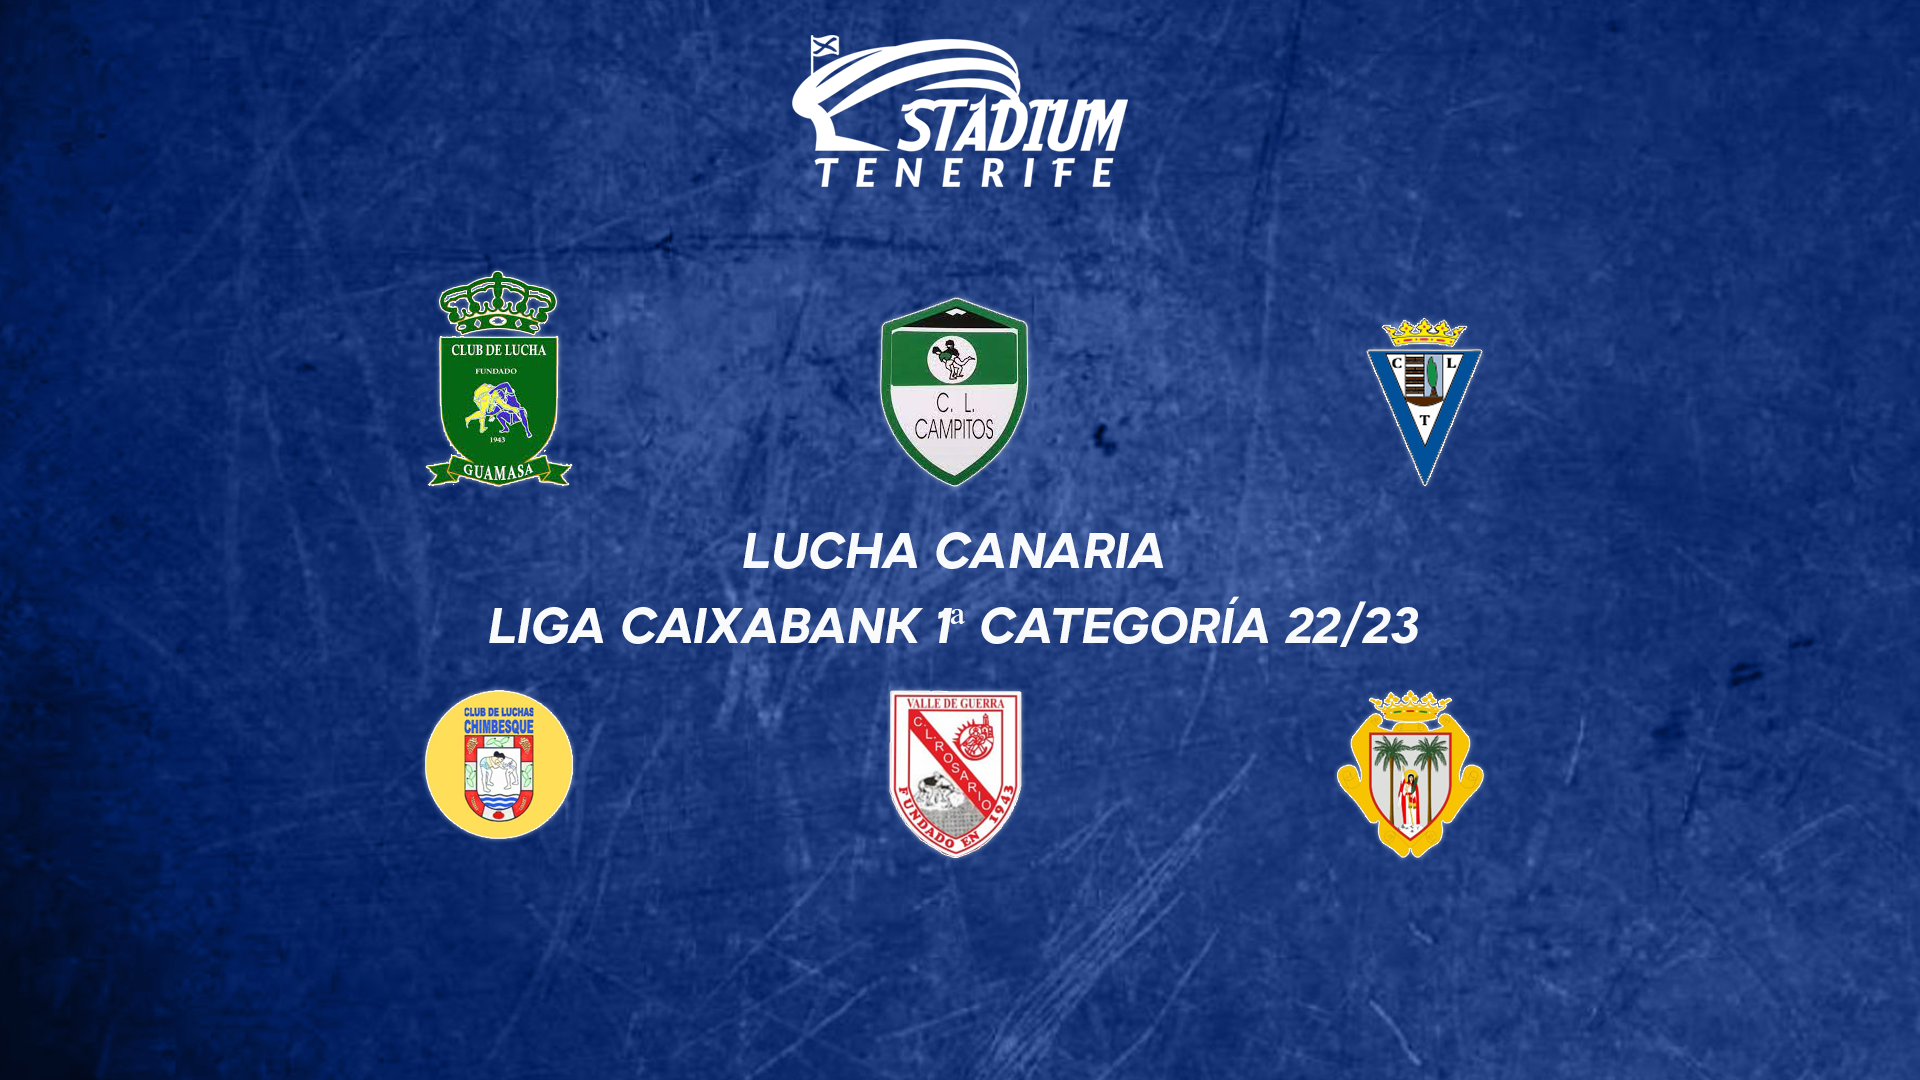 PREVIA | 4ª Jornada de la Liga CaixaBank de Lucha Canaria (18-19-20 de noviembre)